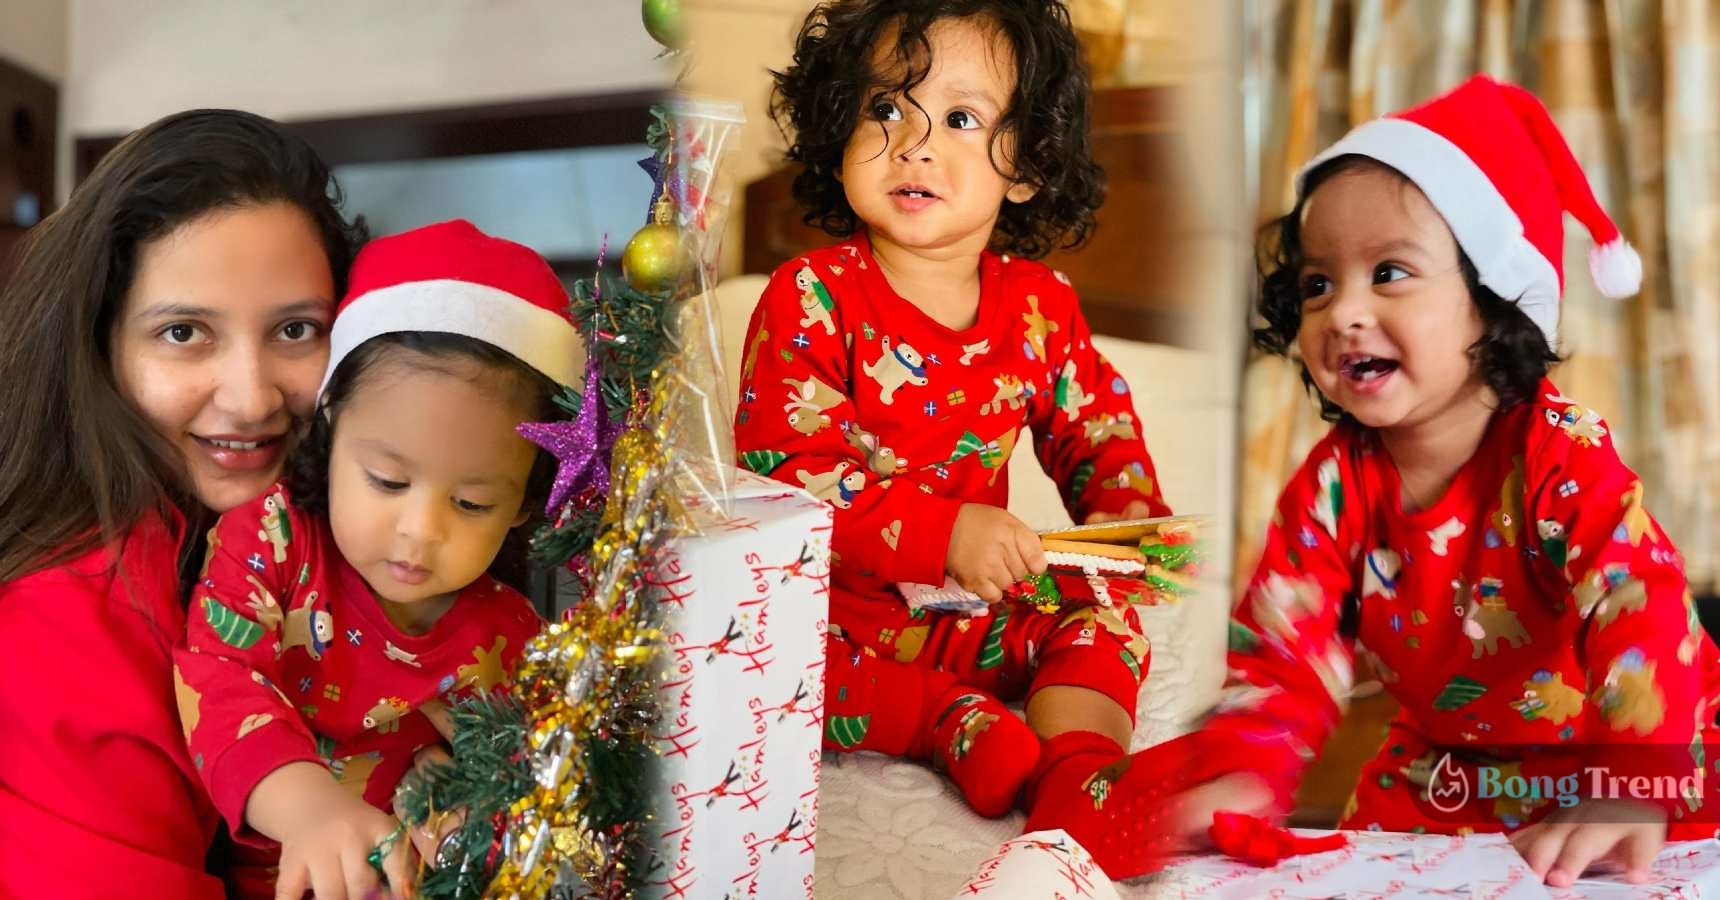 Subhashree Son Yuvaan became little Santa in Christmas শুভশ্রী পুত্র ইউভান ক্রিসমাসে সান্তাক্লজের সাজে